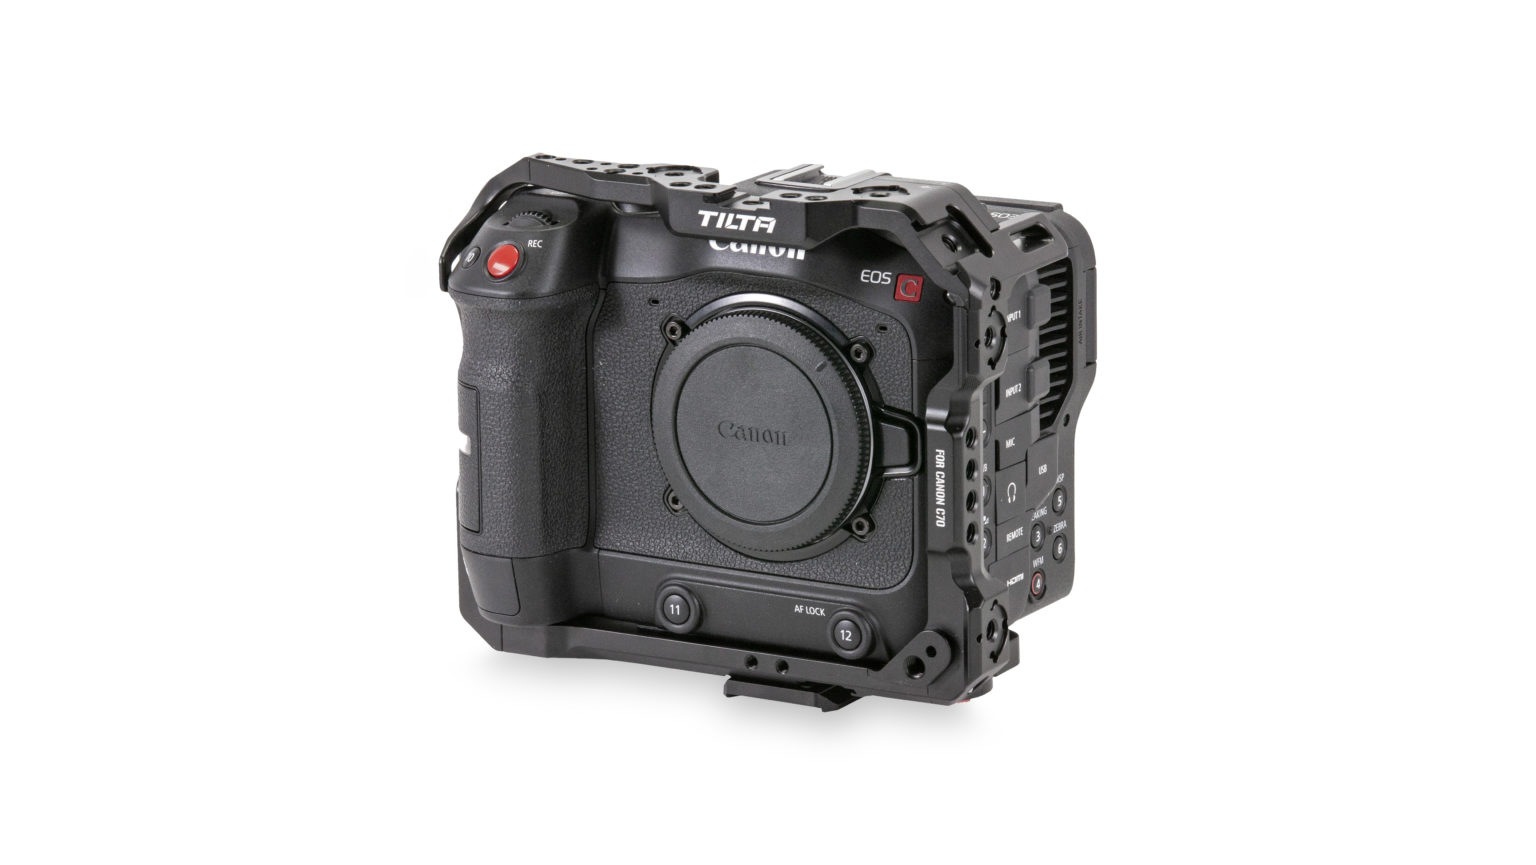 Full Camera Cage for Canon C70 - Black